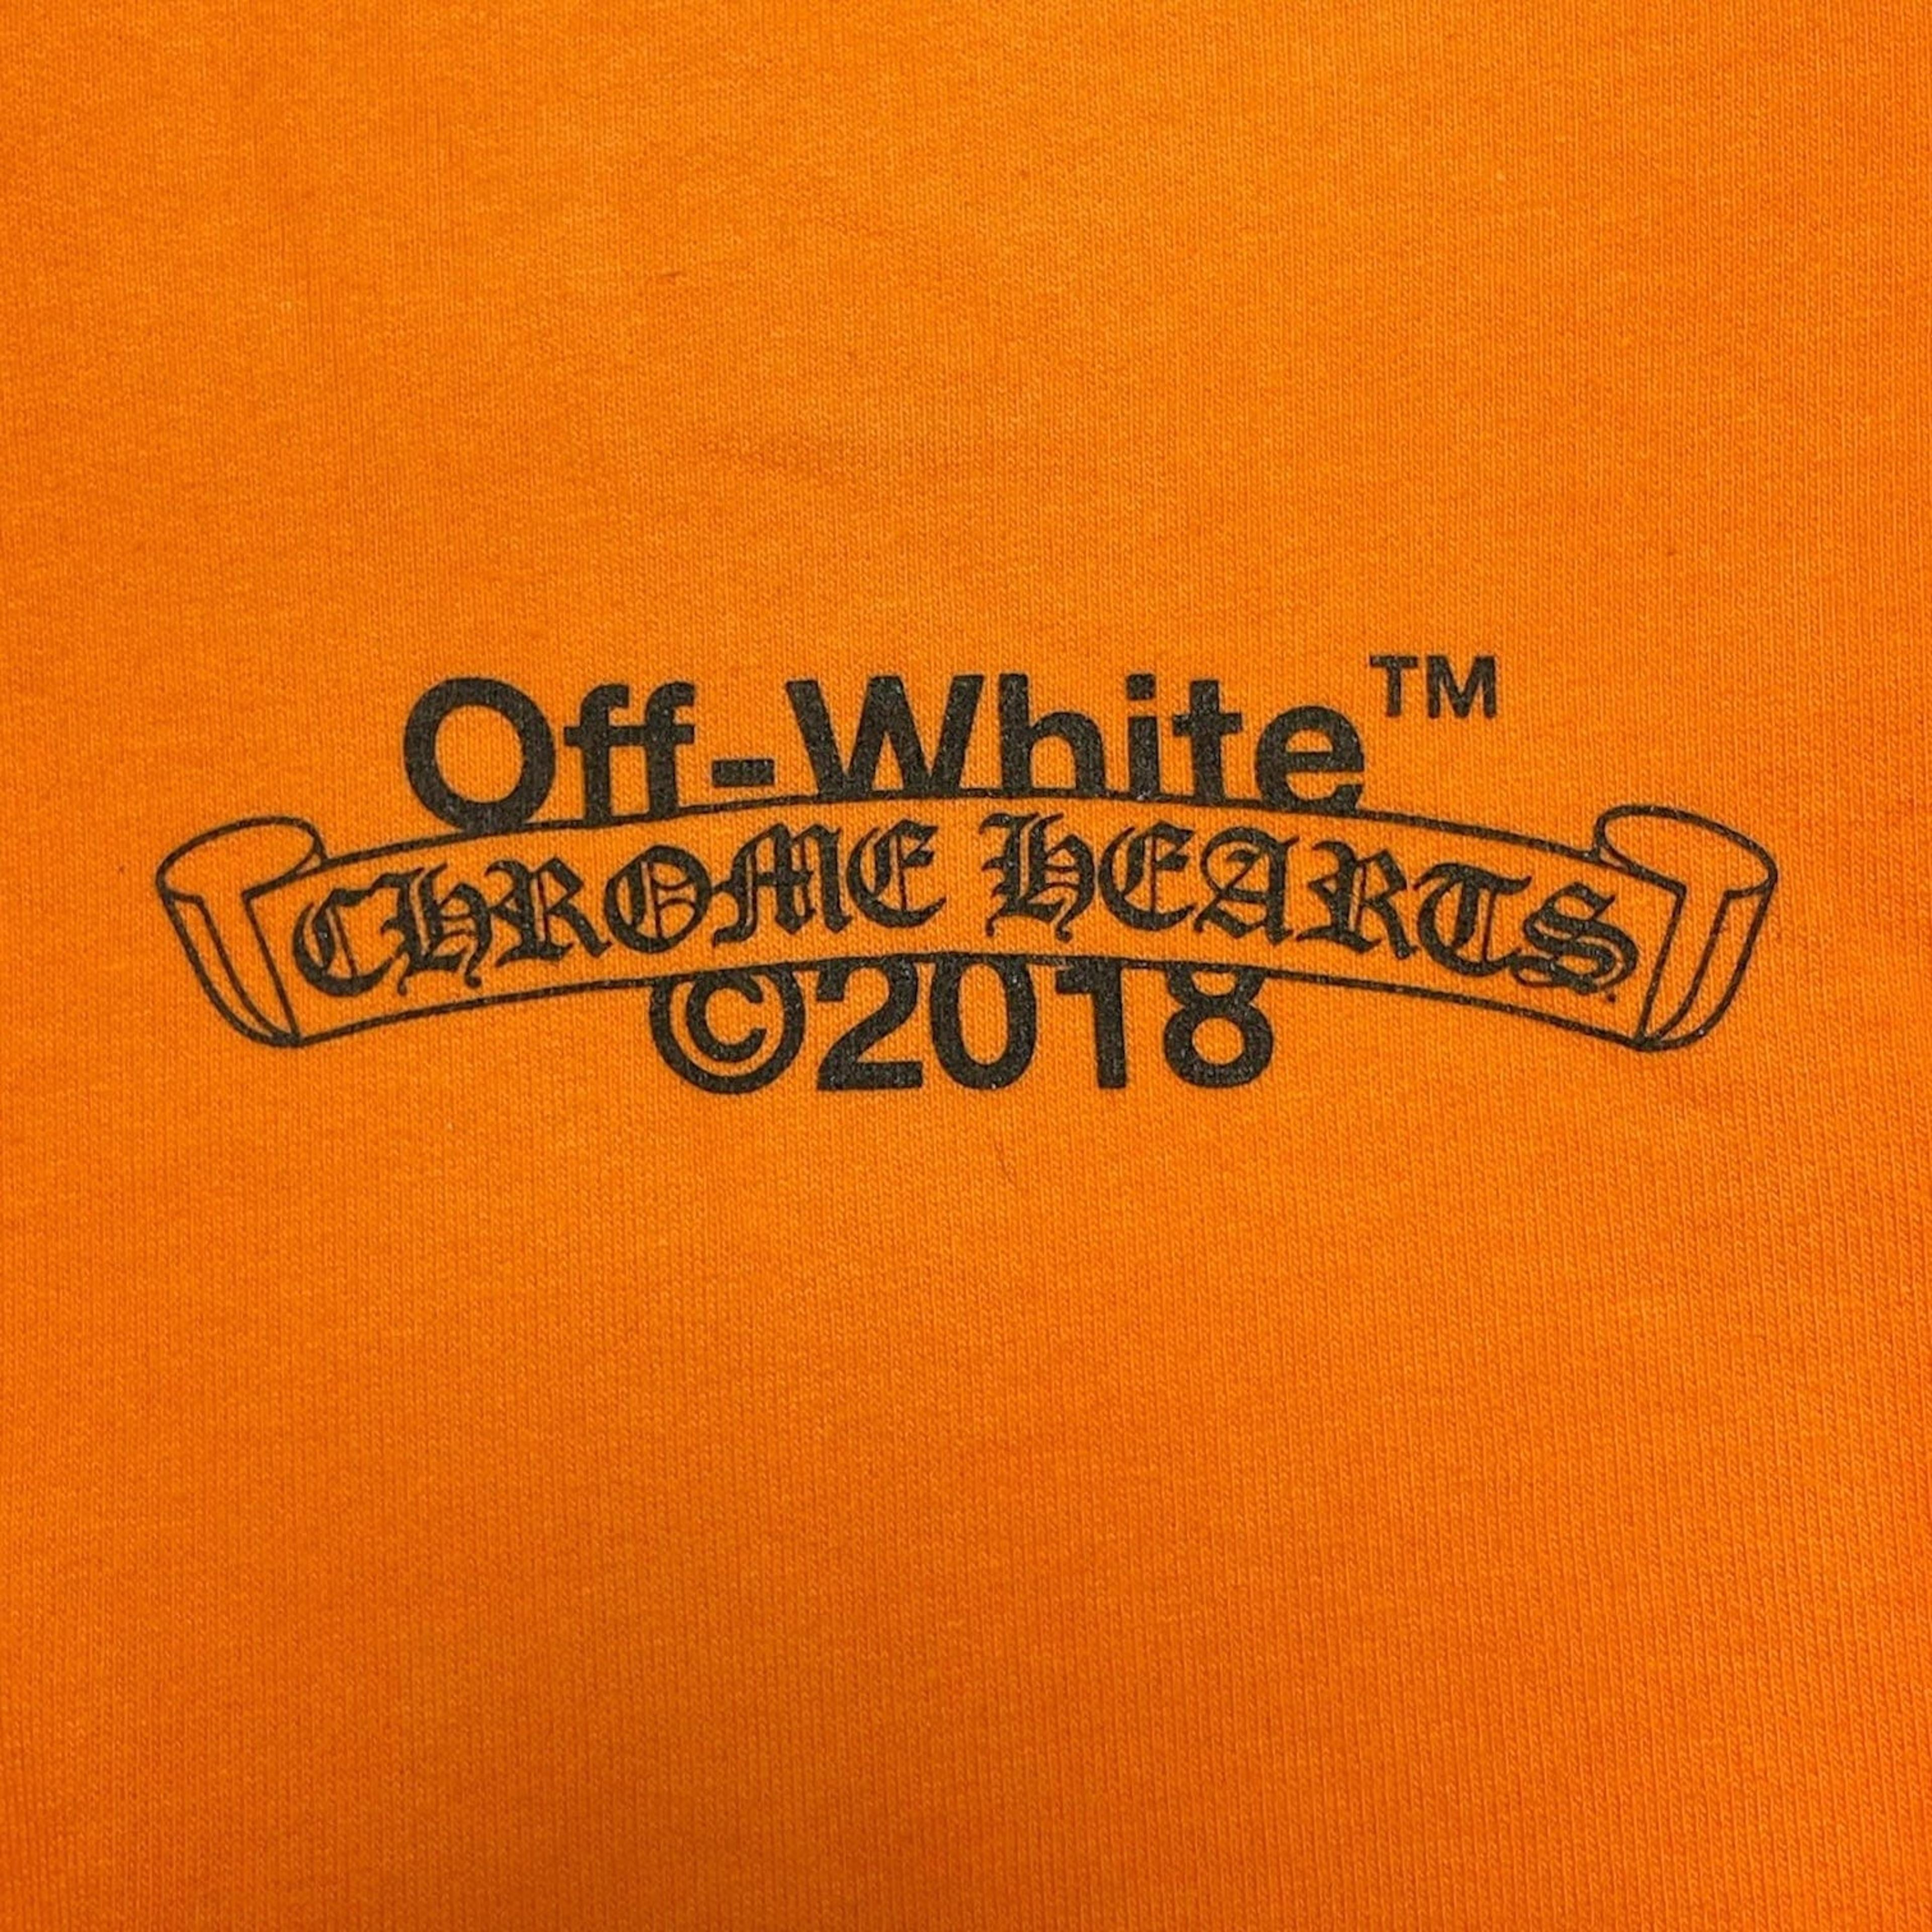 Alternate View 2 of Chrome Hearts x Off-White 2018 Hooded Sweatshirt Orange Black Pr